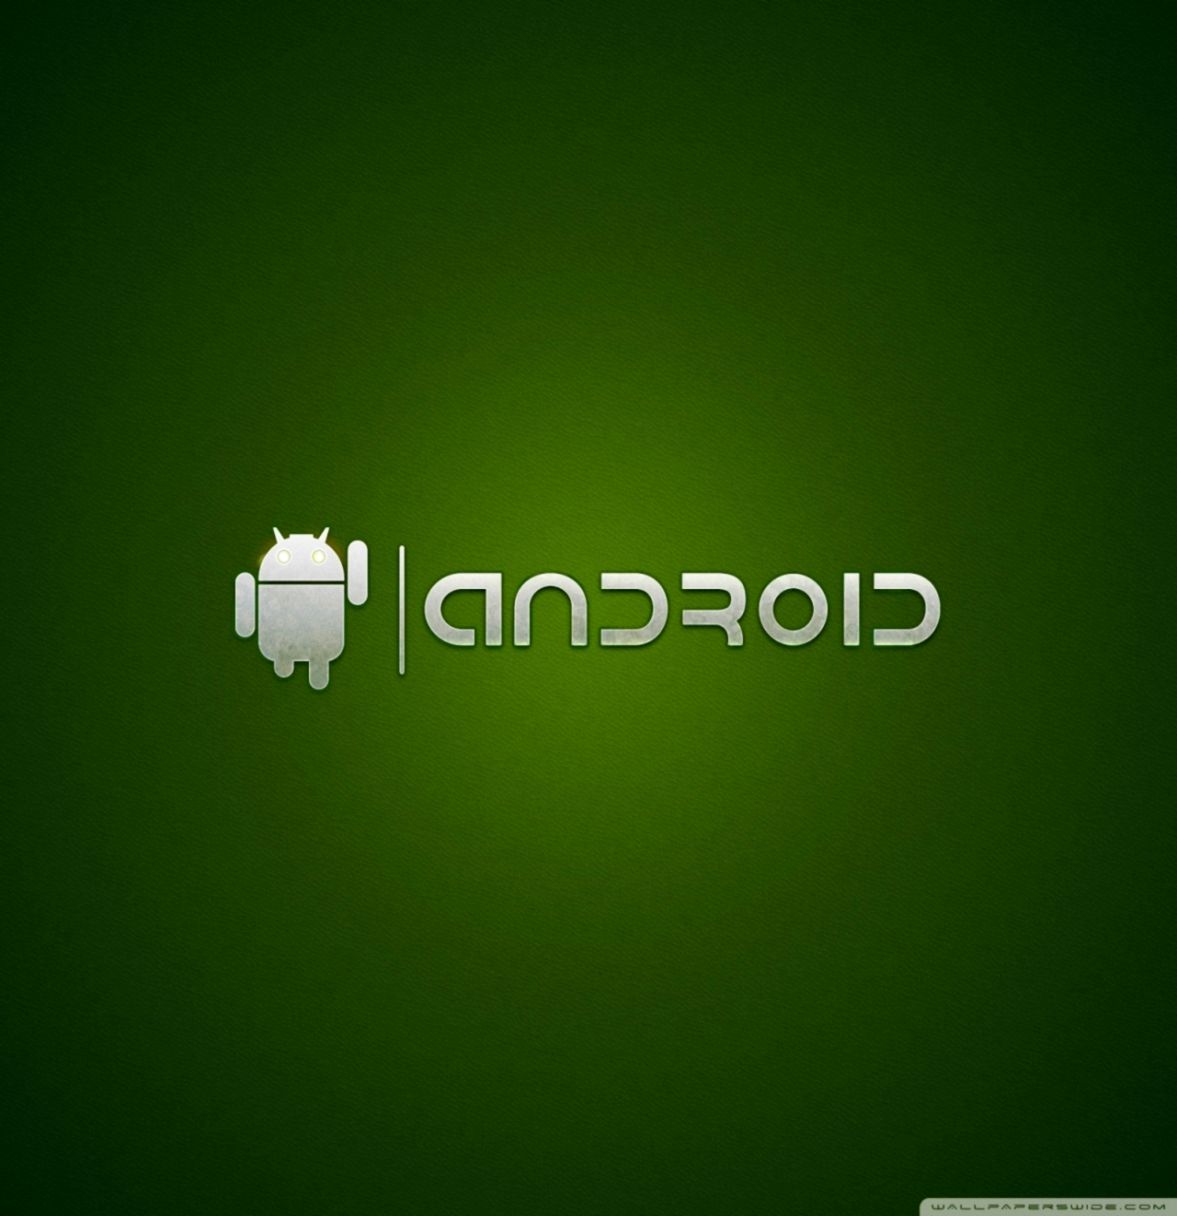 Veda Aco Wallpaper: 4k Wallpaper Android Green